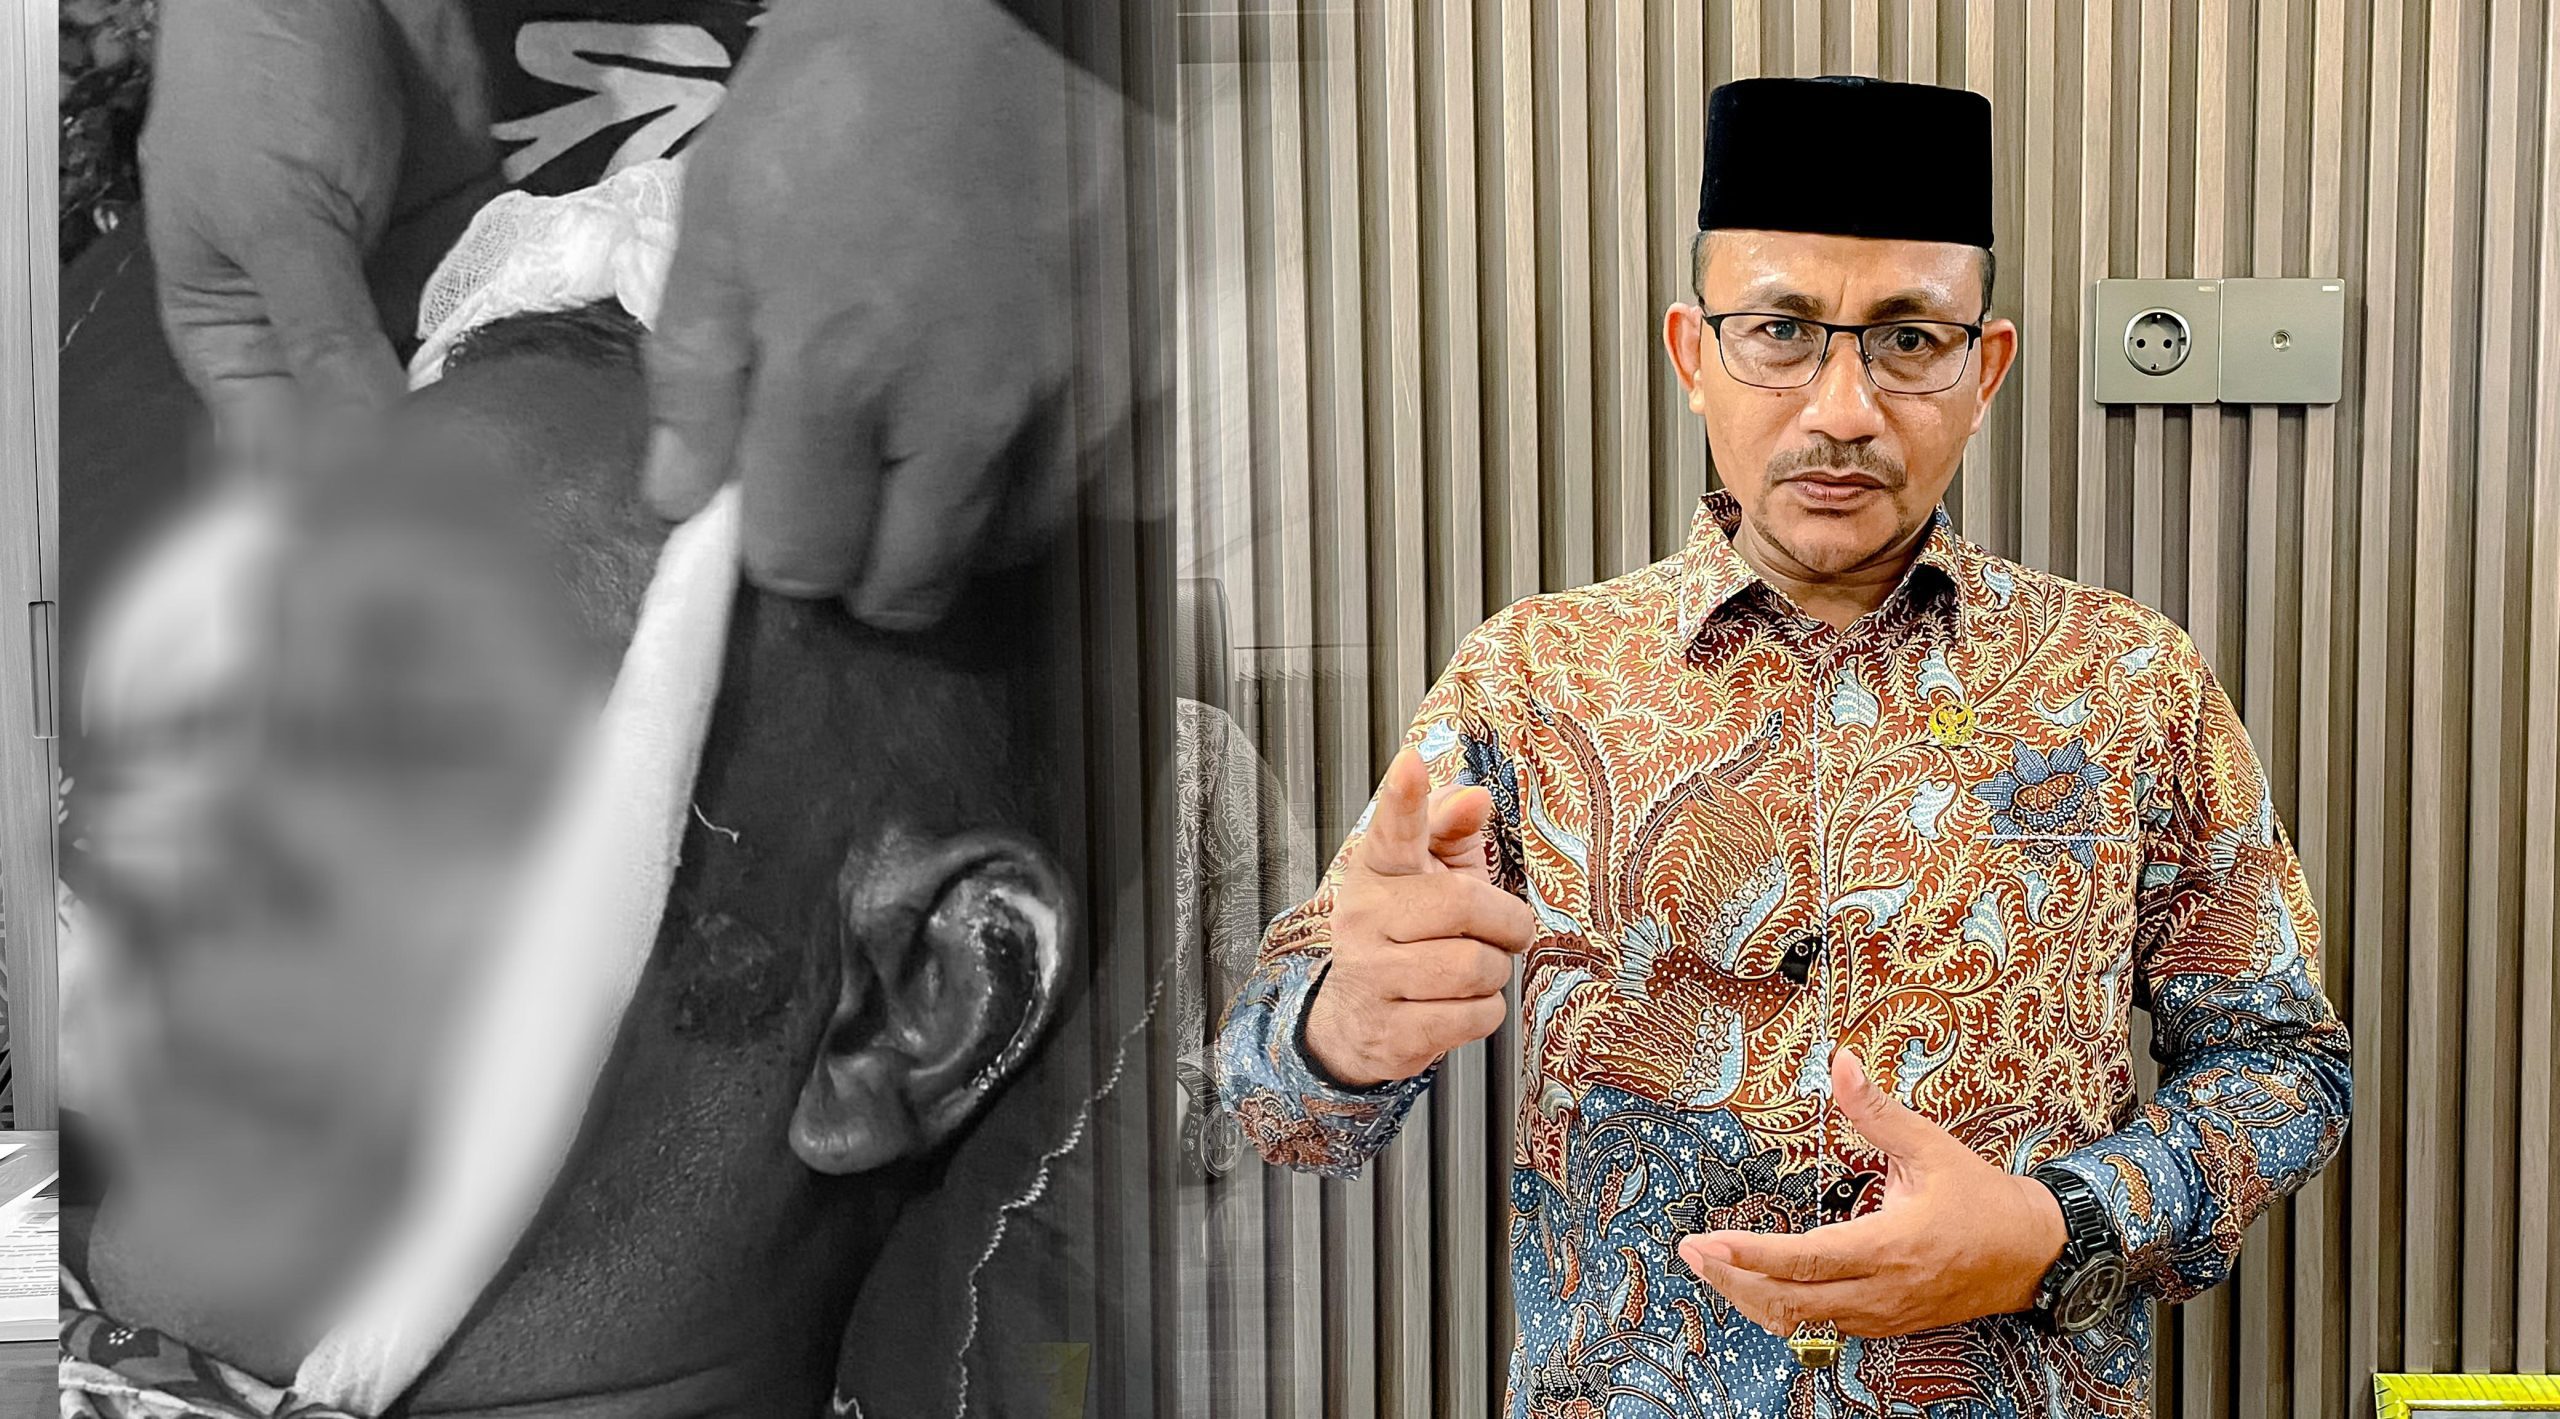 Warga Aceh Utara Meninggal Dunia diduga akibat Dianiaya Oknum Polisi, Haji Uma Minta Polda Aceh Tangani Serius